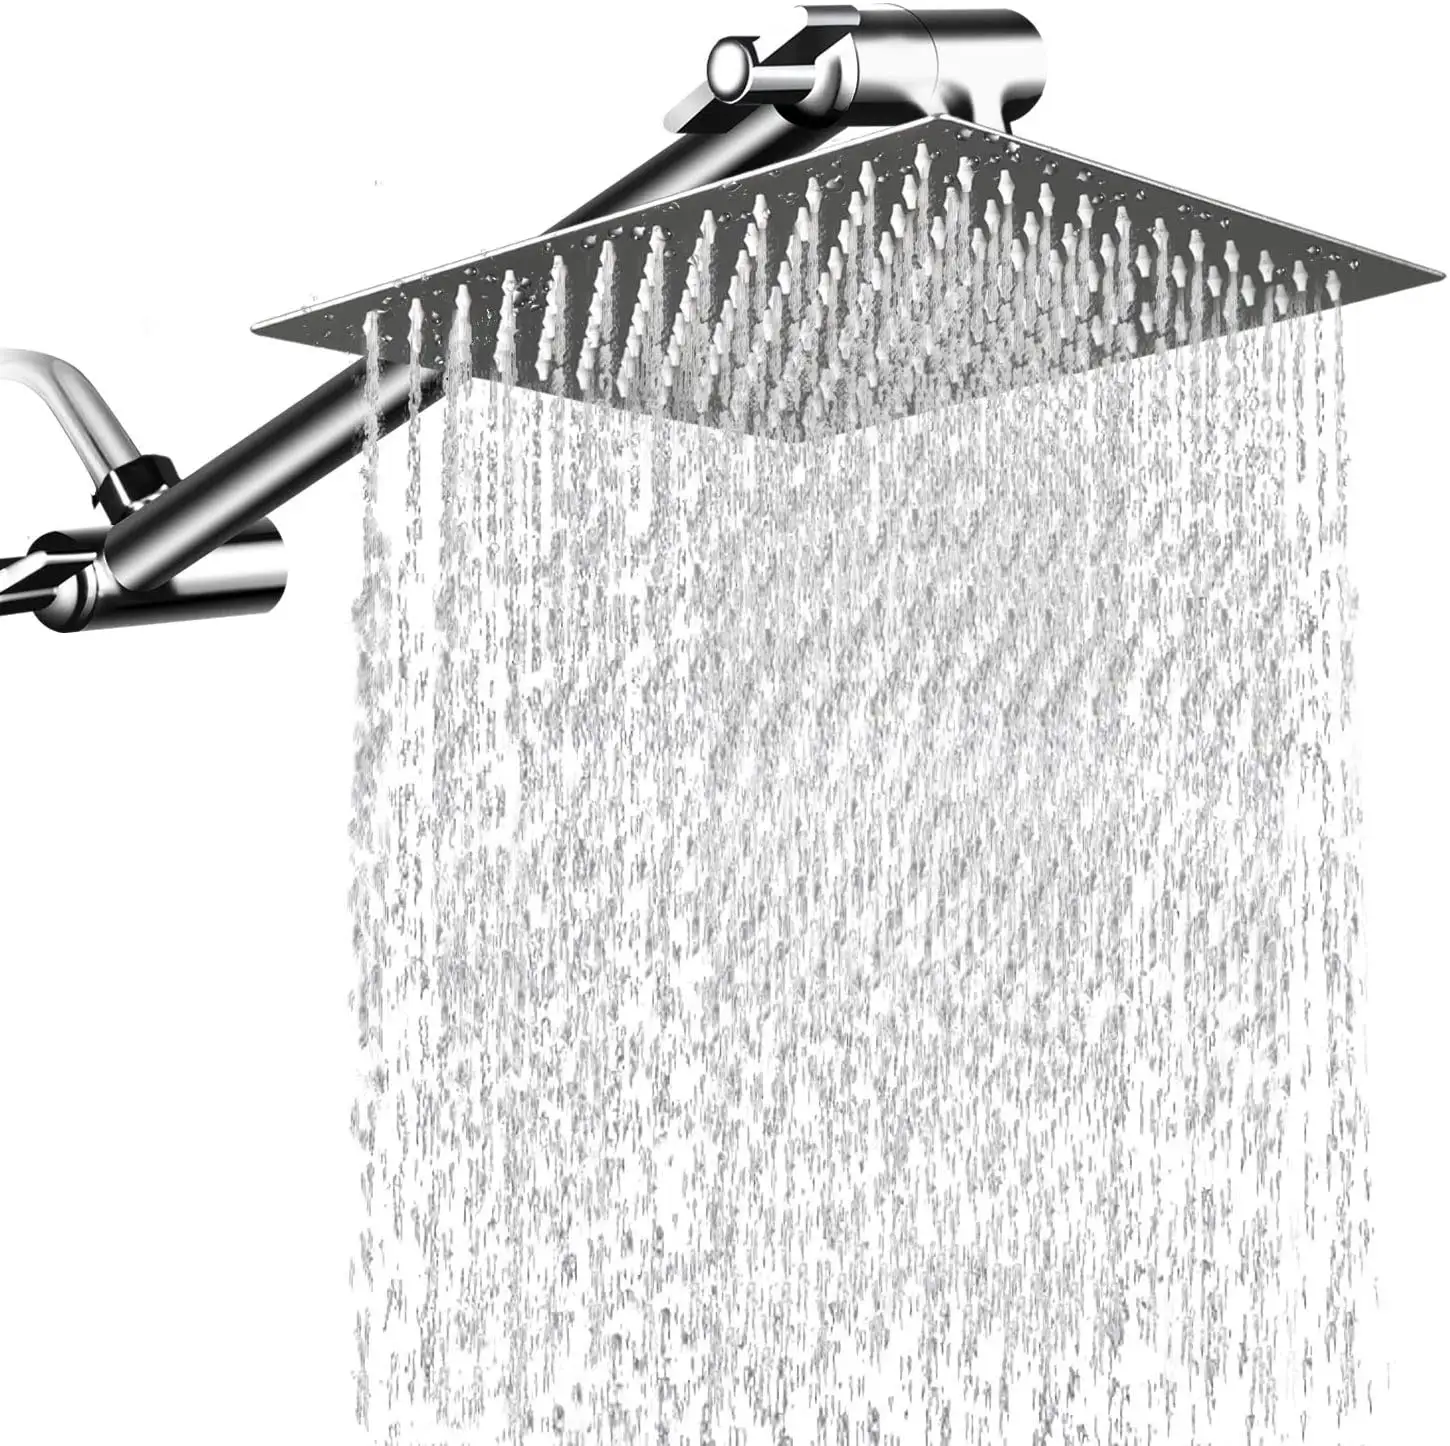 High quality ultra thin 304 stainless steel polish chrome rainfall overhead shower head